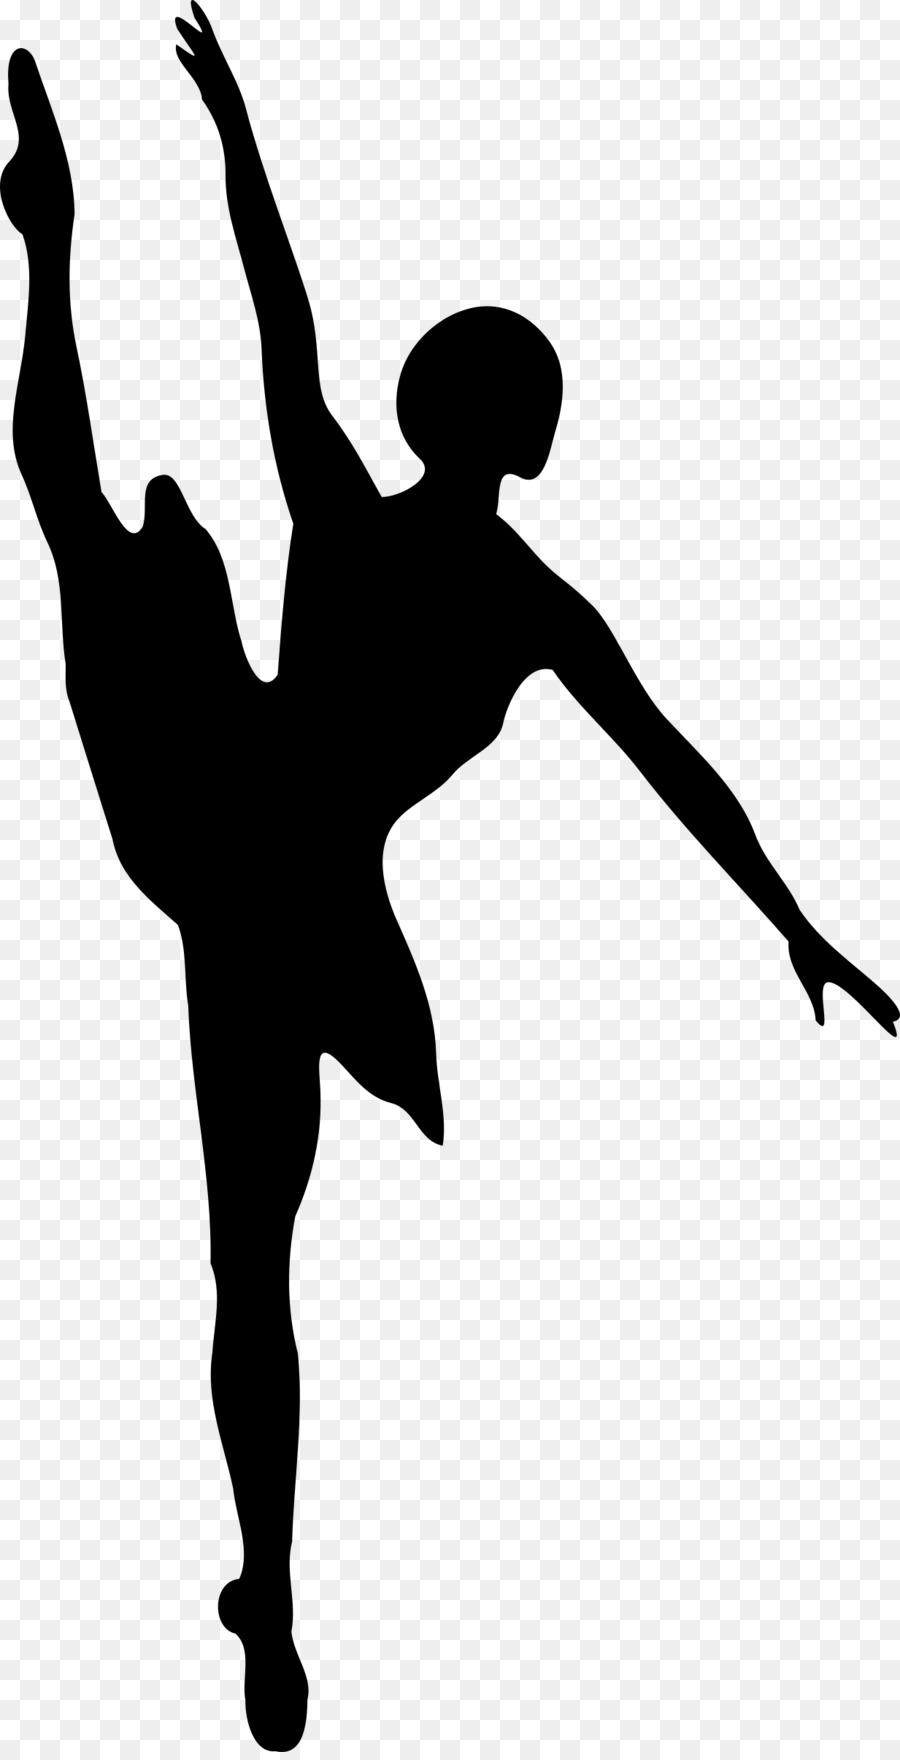 Free dance Ballet Dancer Clip art - dance png download - 1233*2400 - Free Transparent Dance png Download.